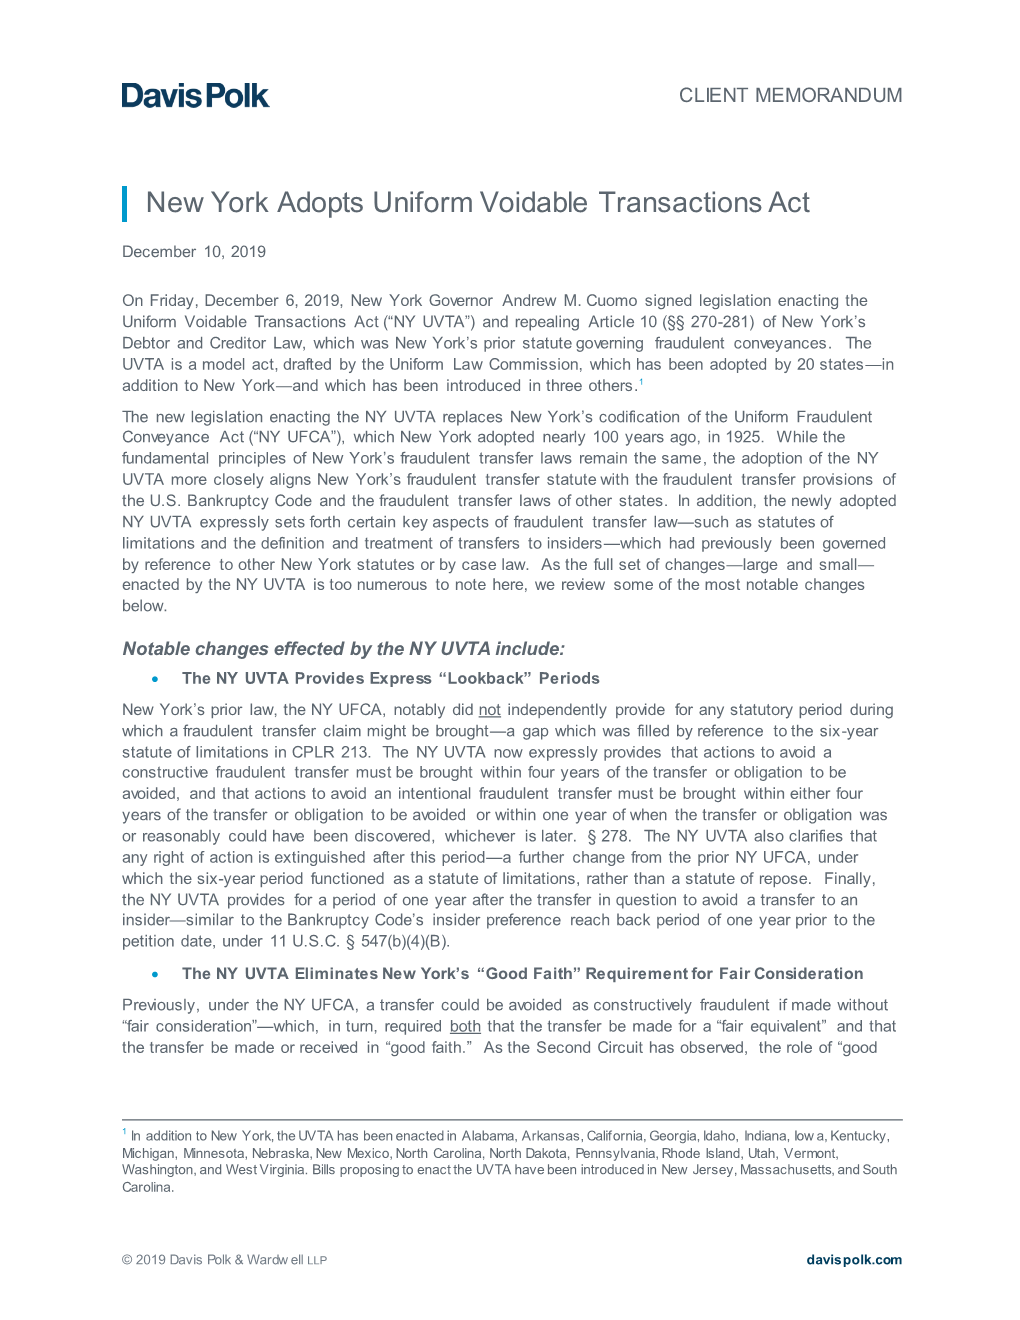 New York Enacts UVTA, Modernizing Fraudulent Conveyance